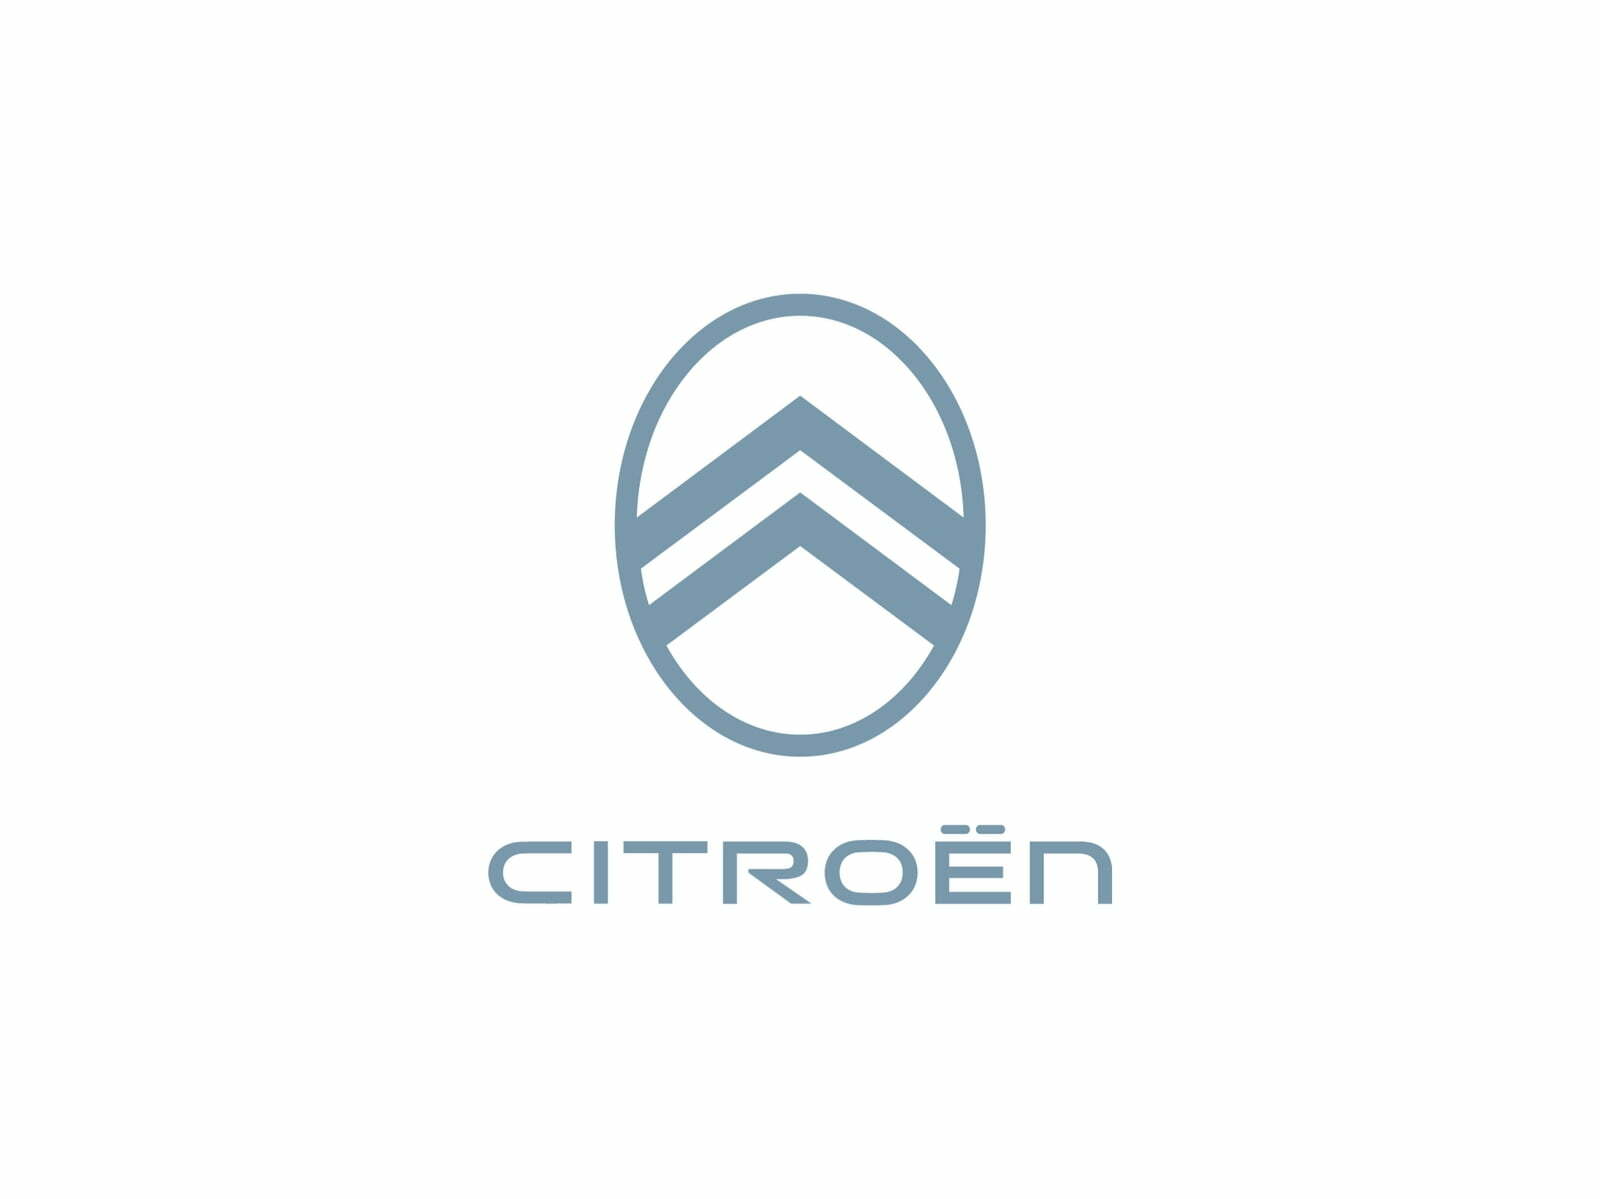 New Citroën Logo_Blue